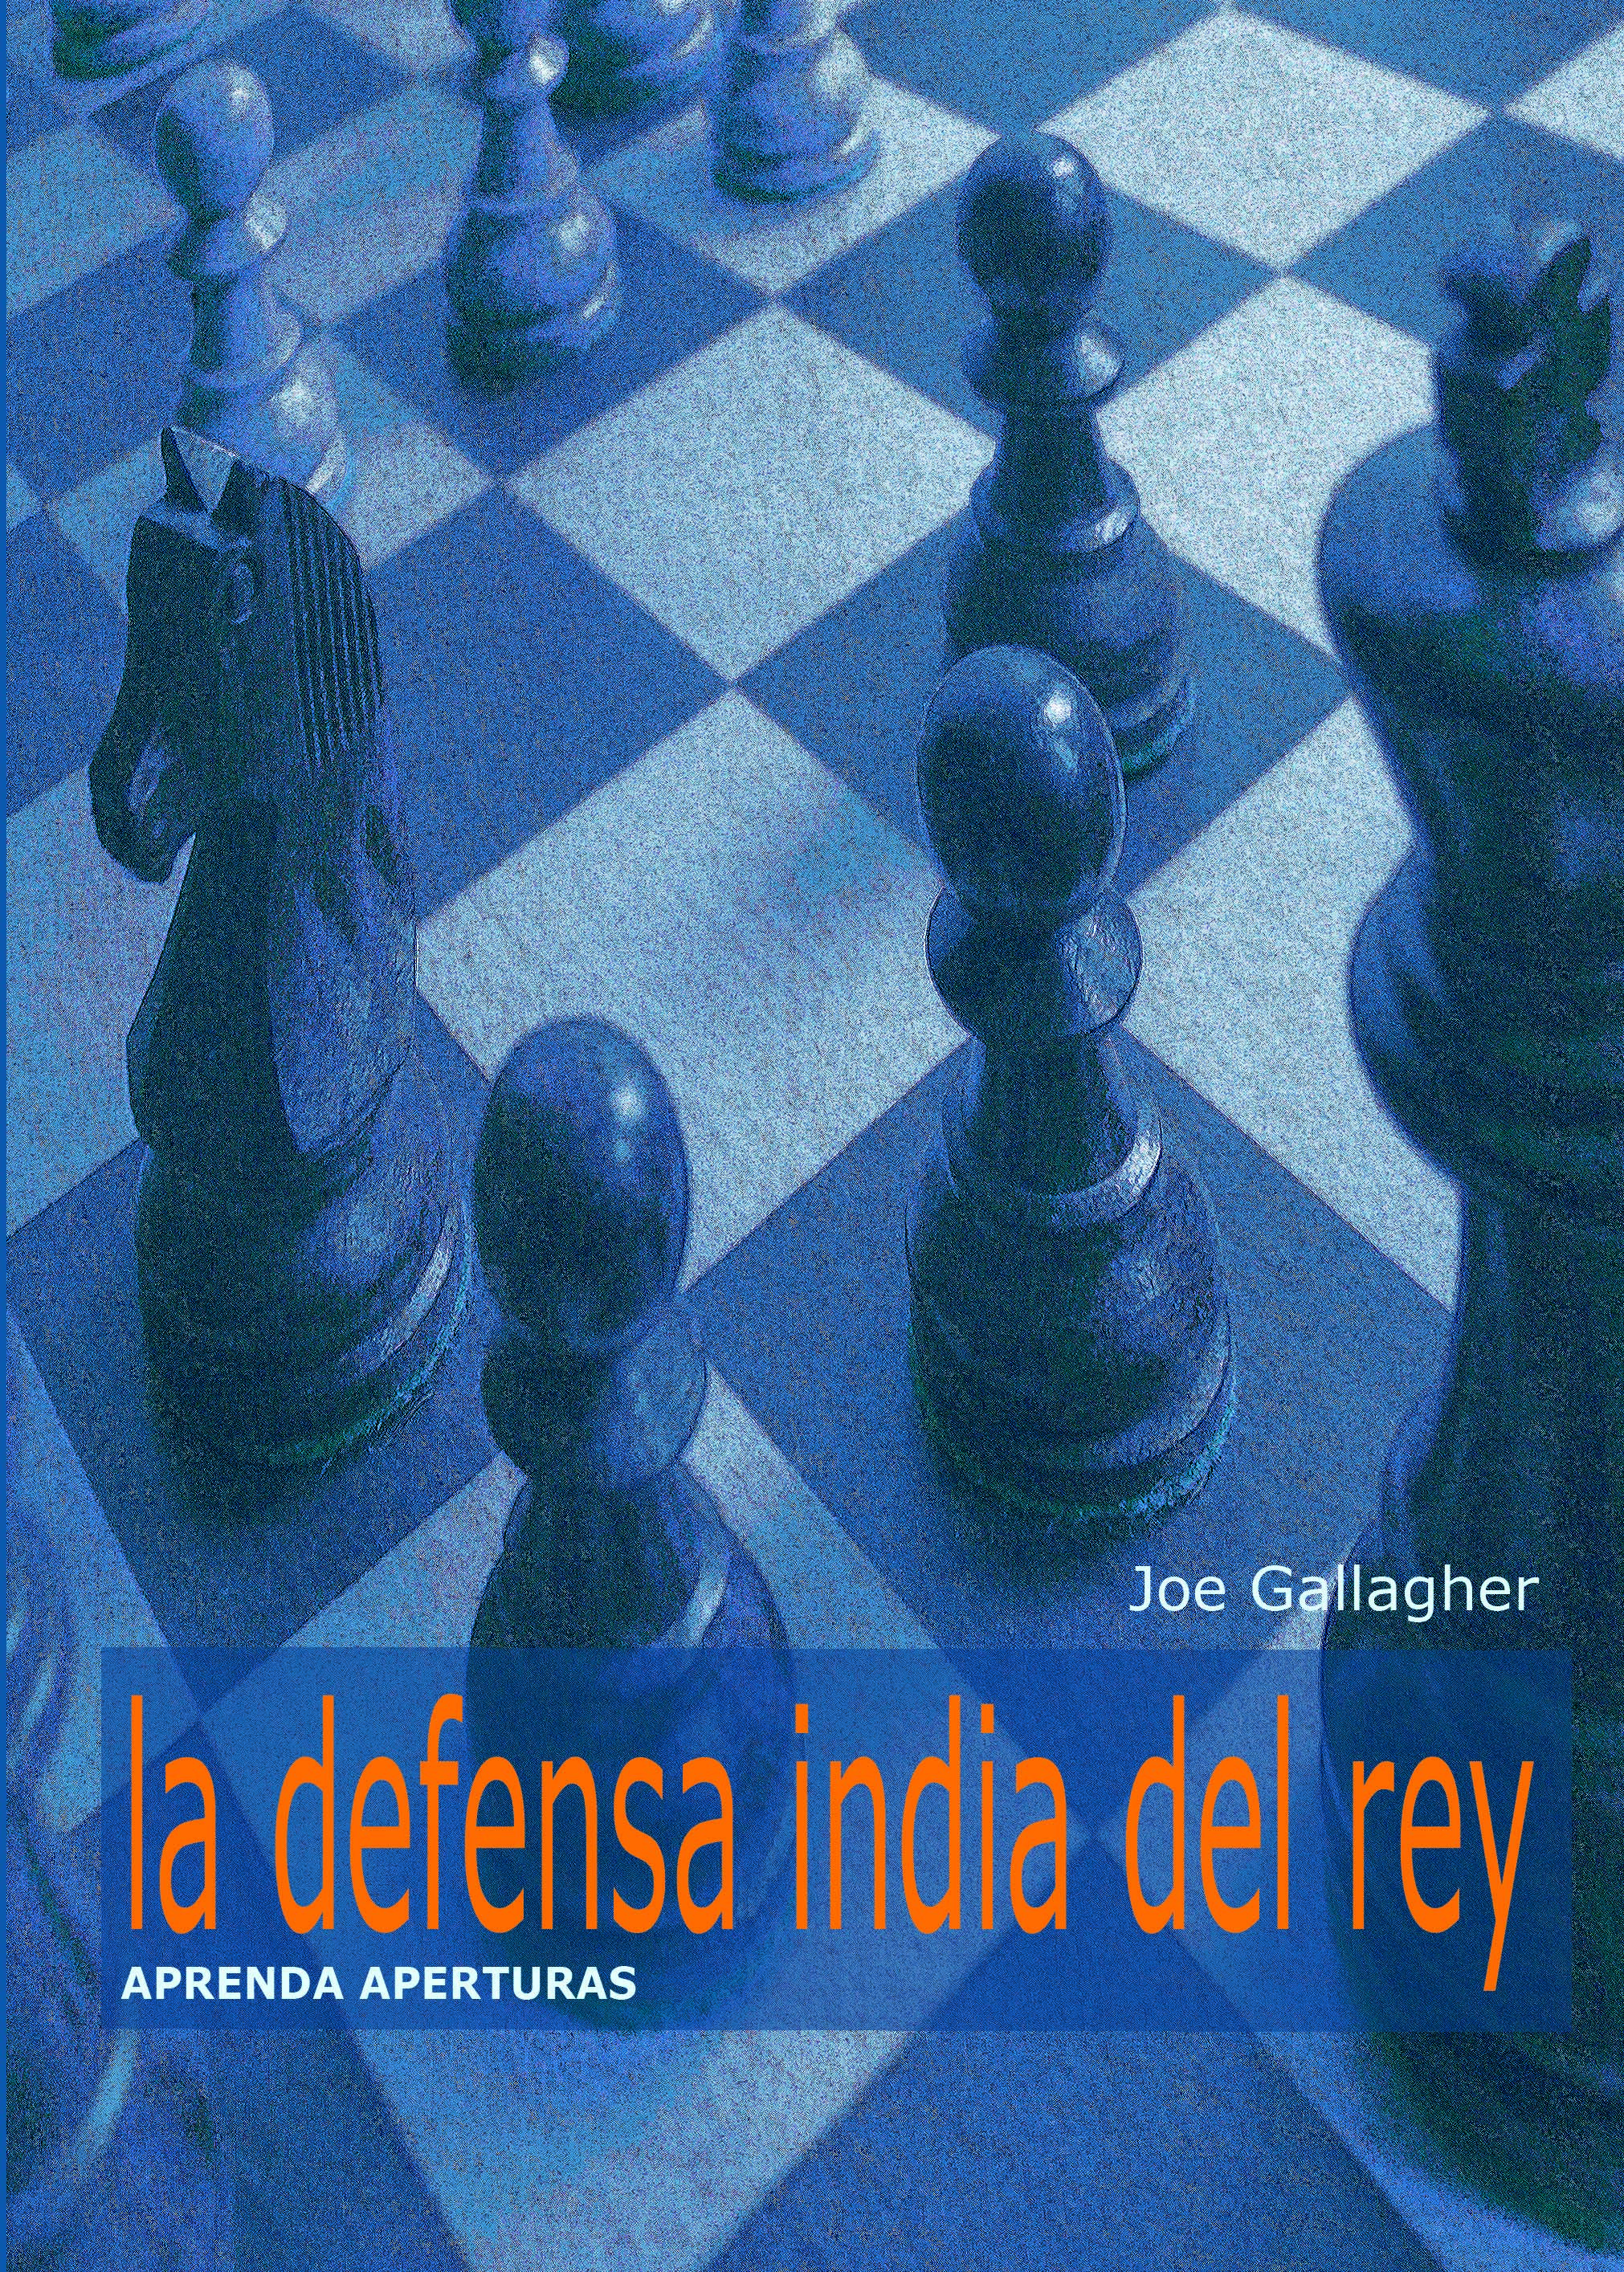 Aprenda aperturas. La Defensa India de Rey